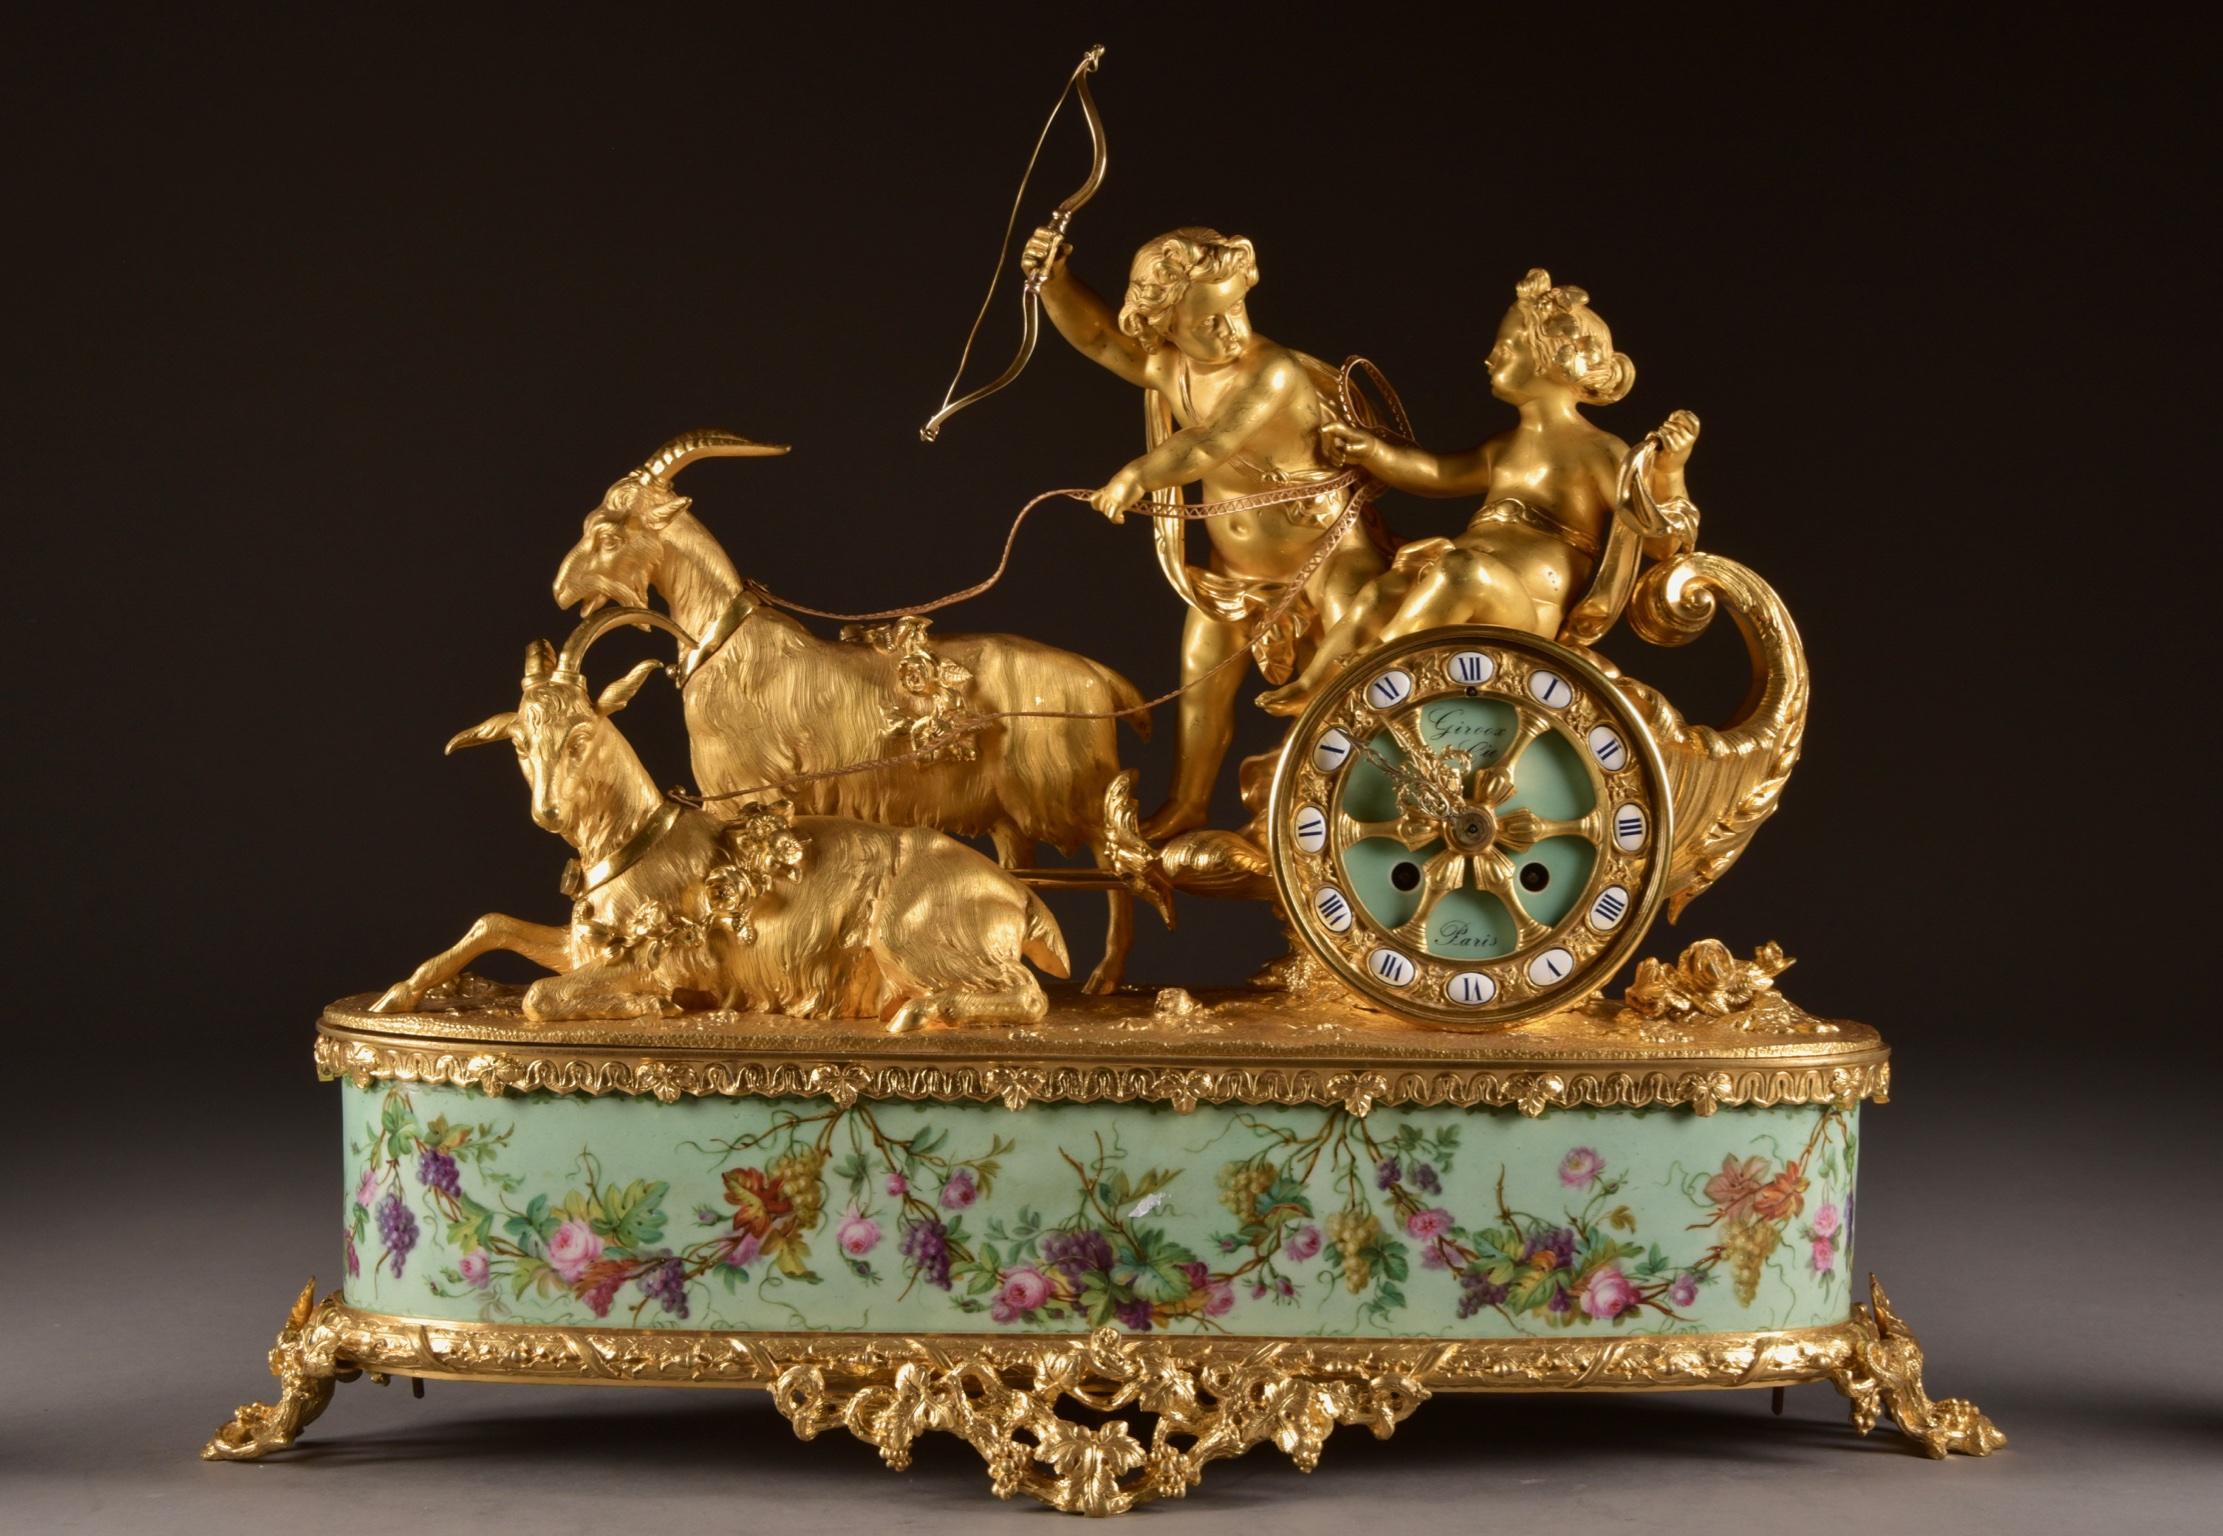 Napoleon III Large rare gilt-Bronze and Porcelain Chariot by Alph. Giroux & Cie, Paris, 1855